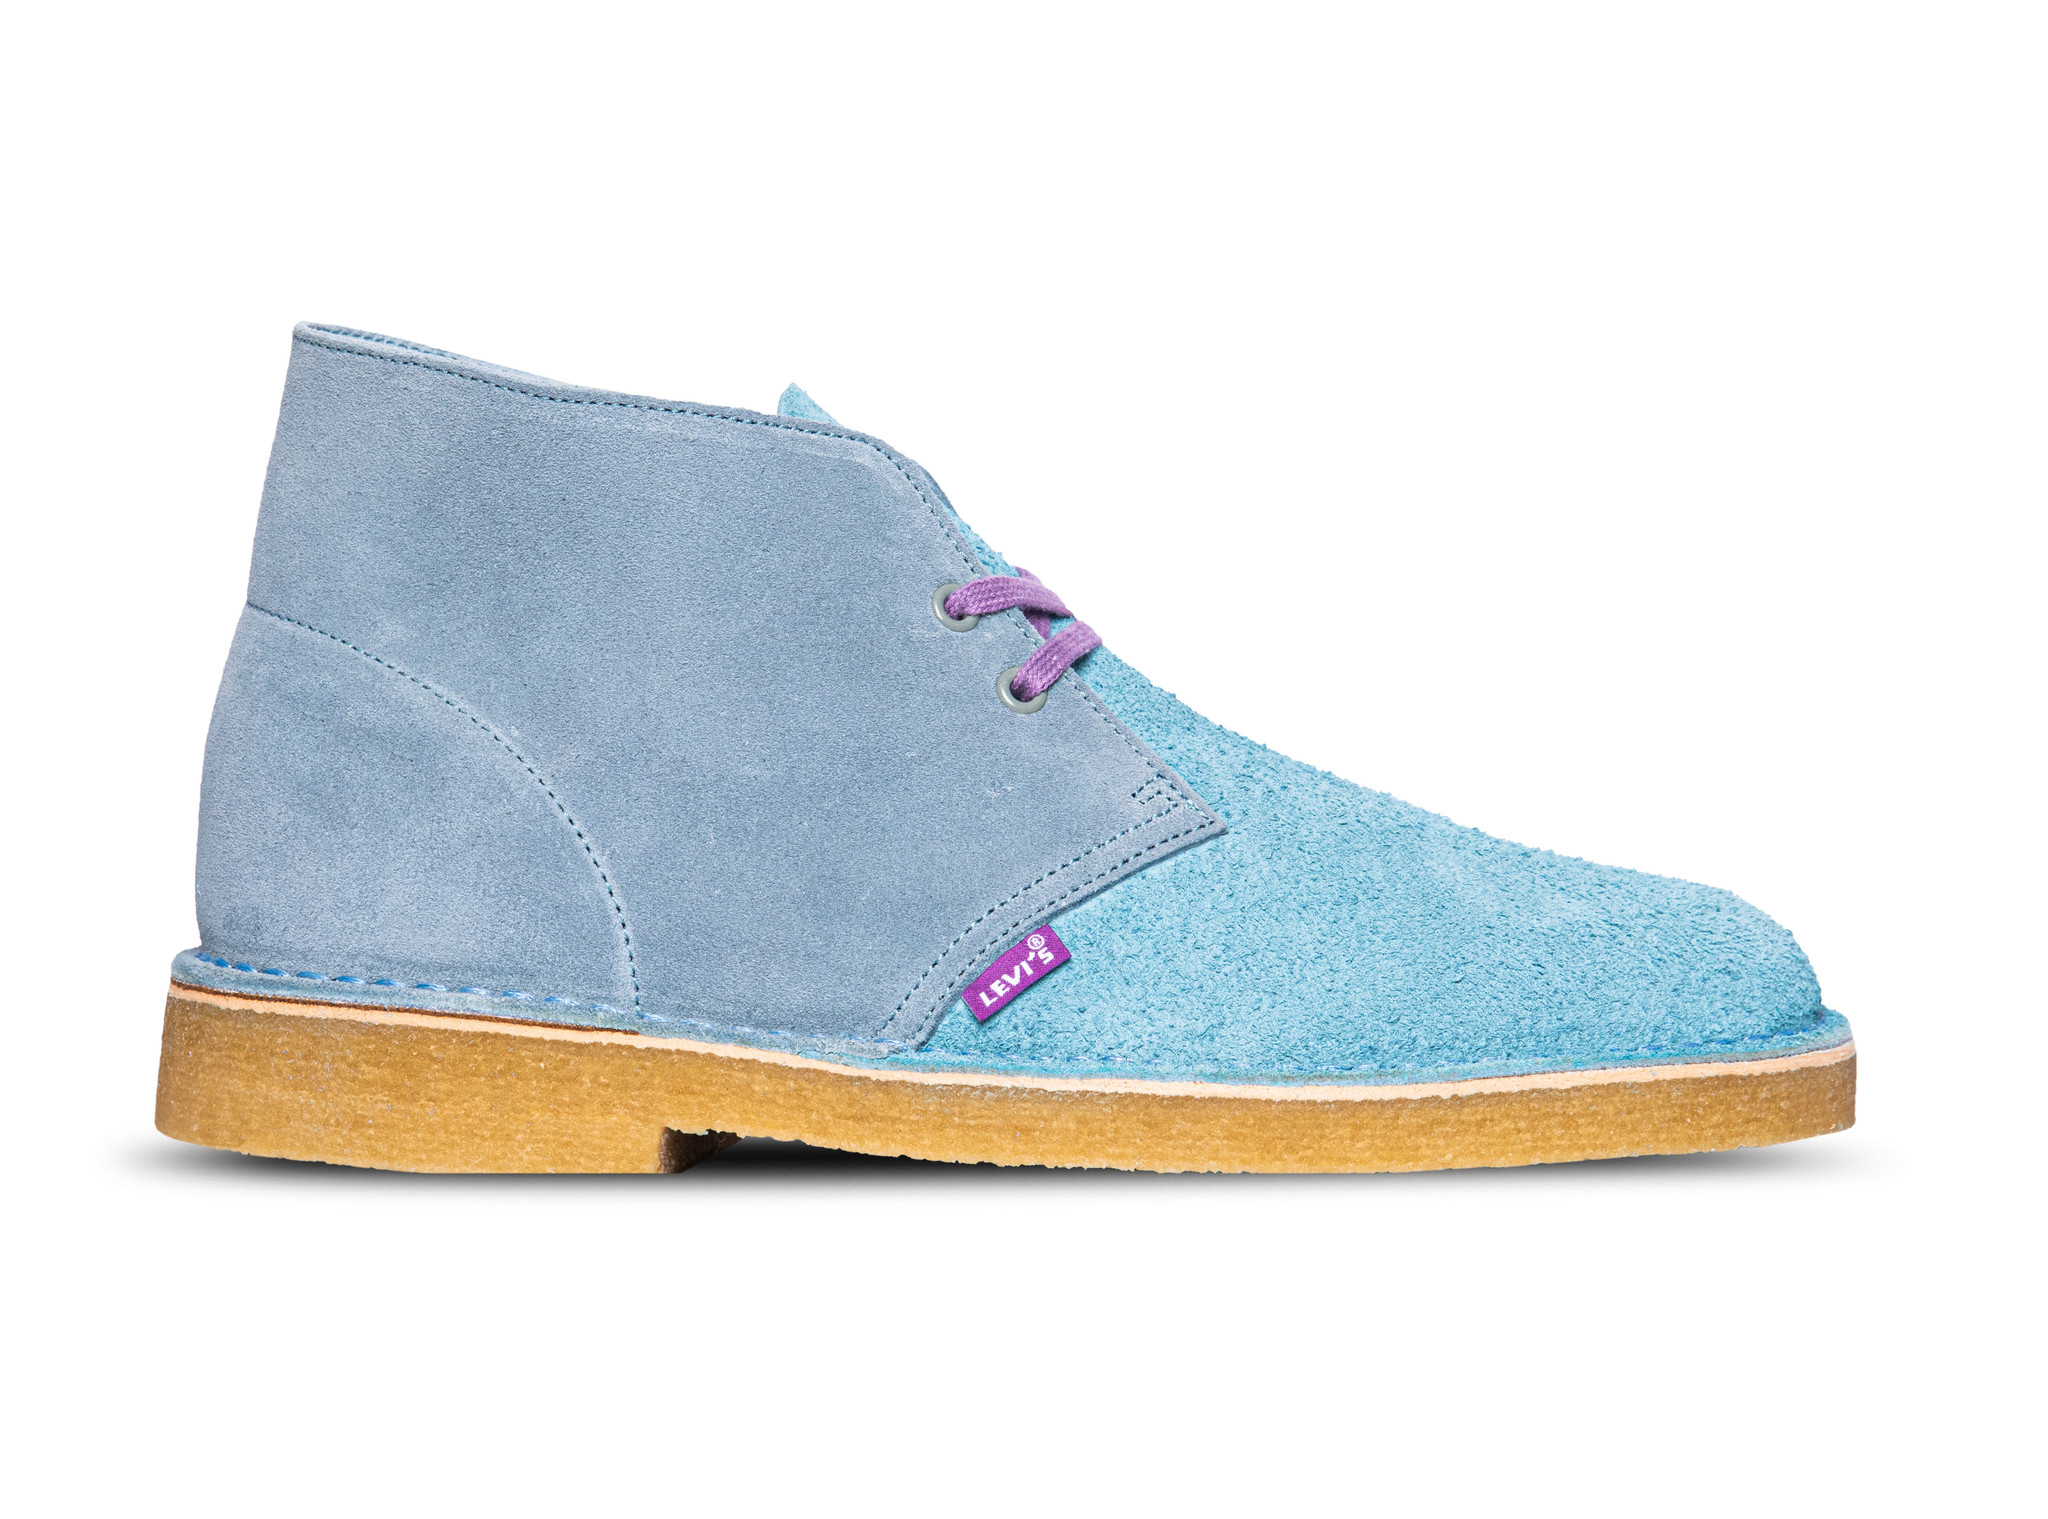 Clarks Originals x Levis Desert Boot Pale Blue 26160325 - Bruut Sneakers &  Clothing Store